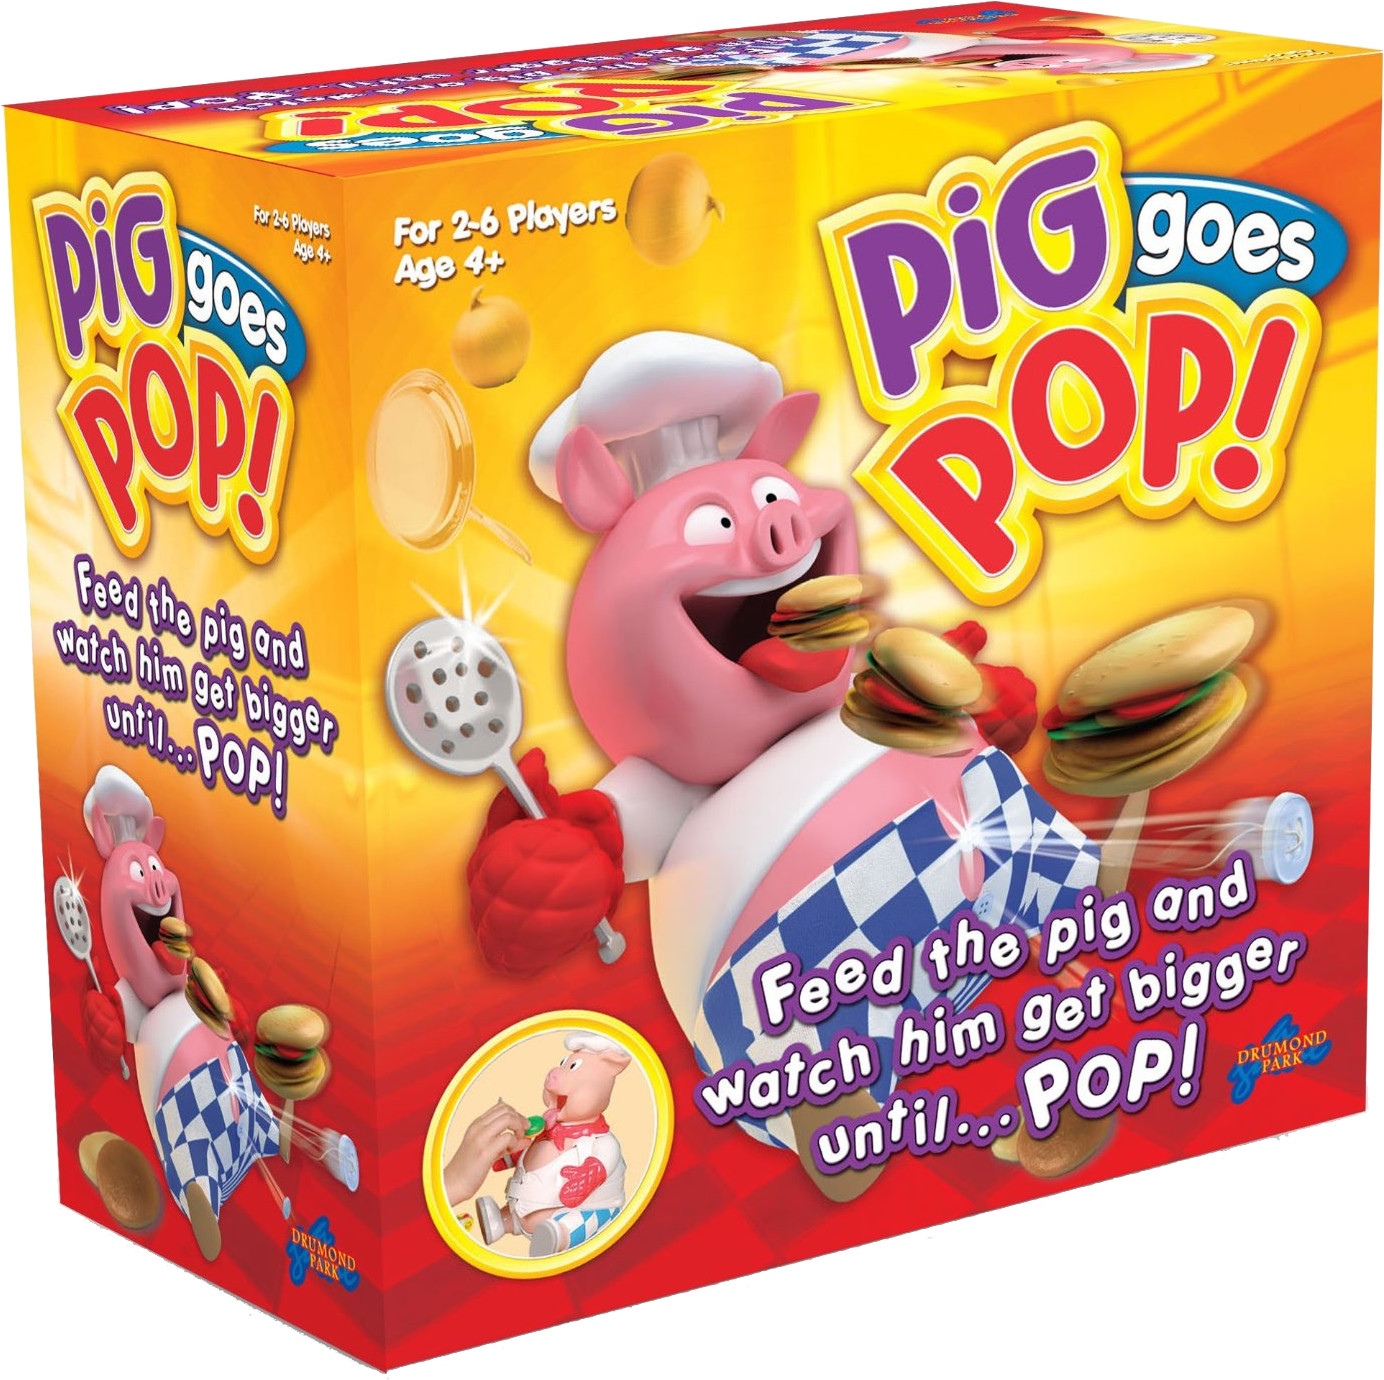 Pig Goes Pop